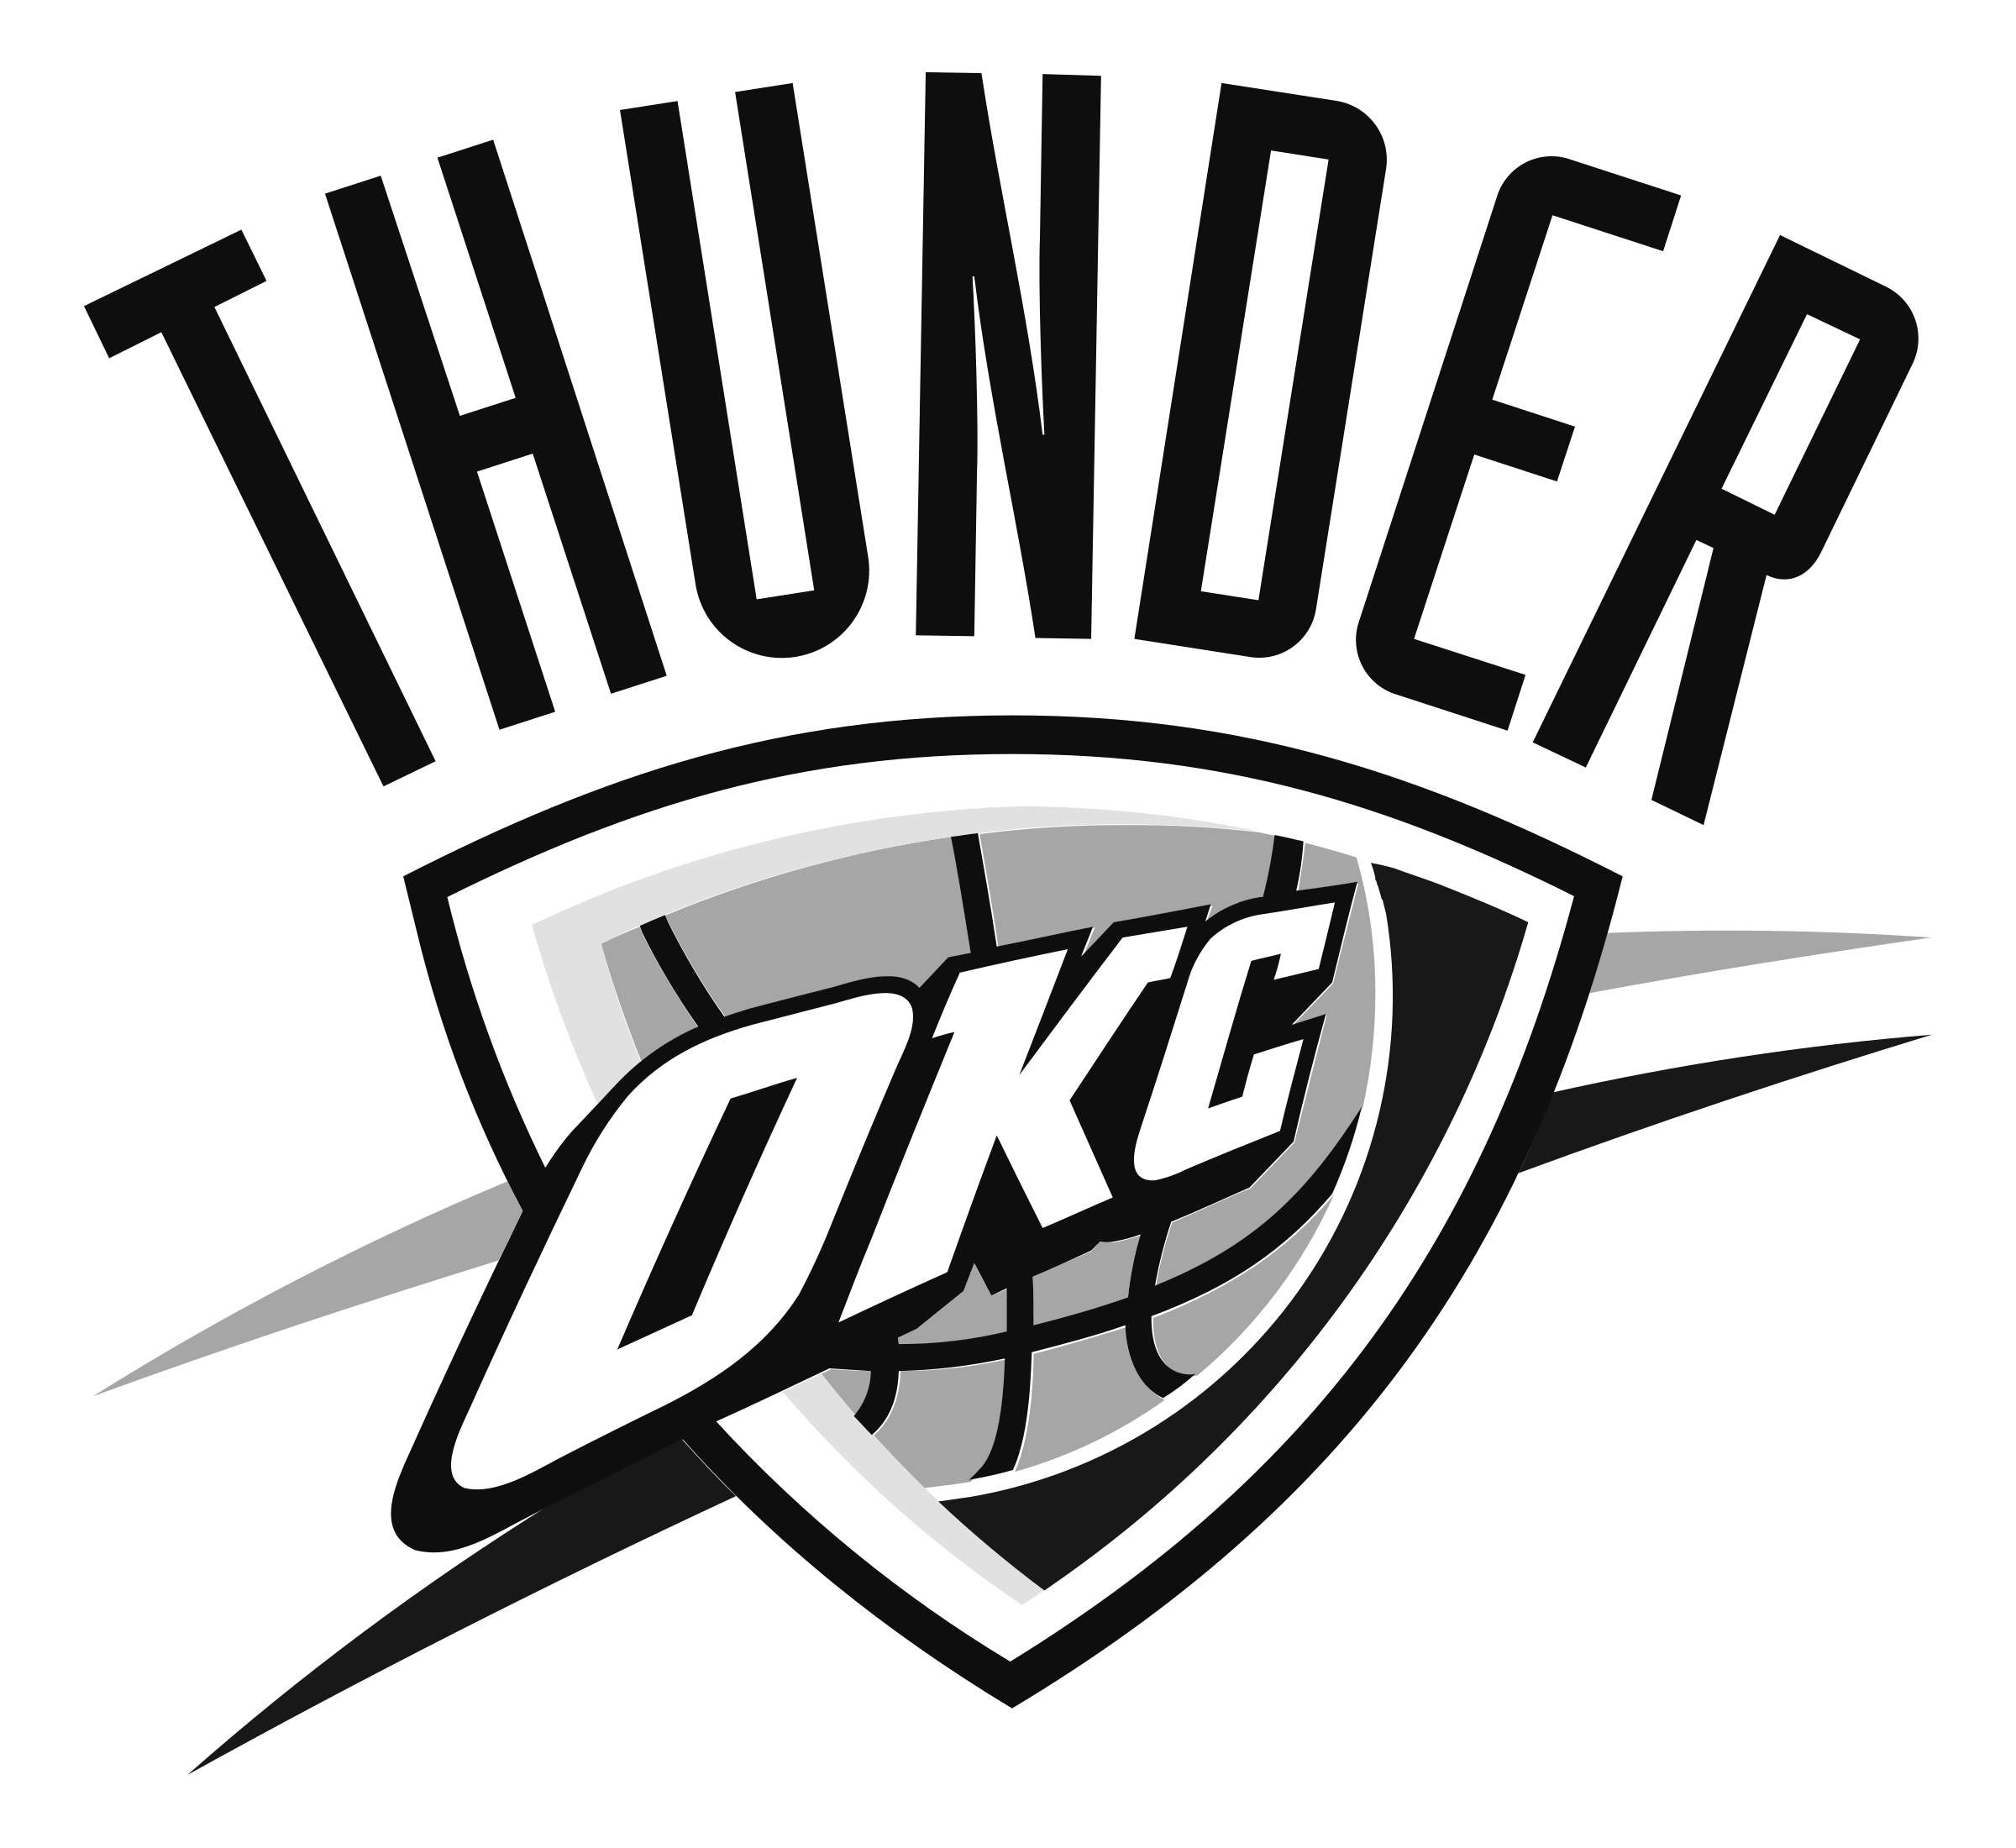 Oklahoma Thunder Logo - Oklahoma City Thunder Logo PNG Transparent & SVG Vector - Freebie Supply